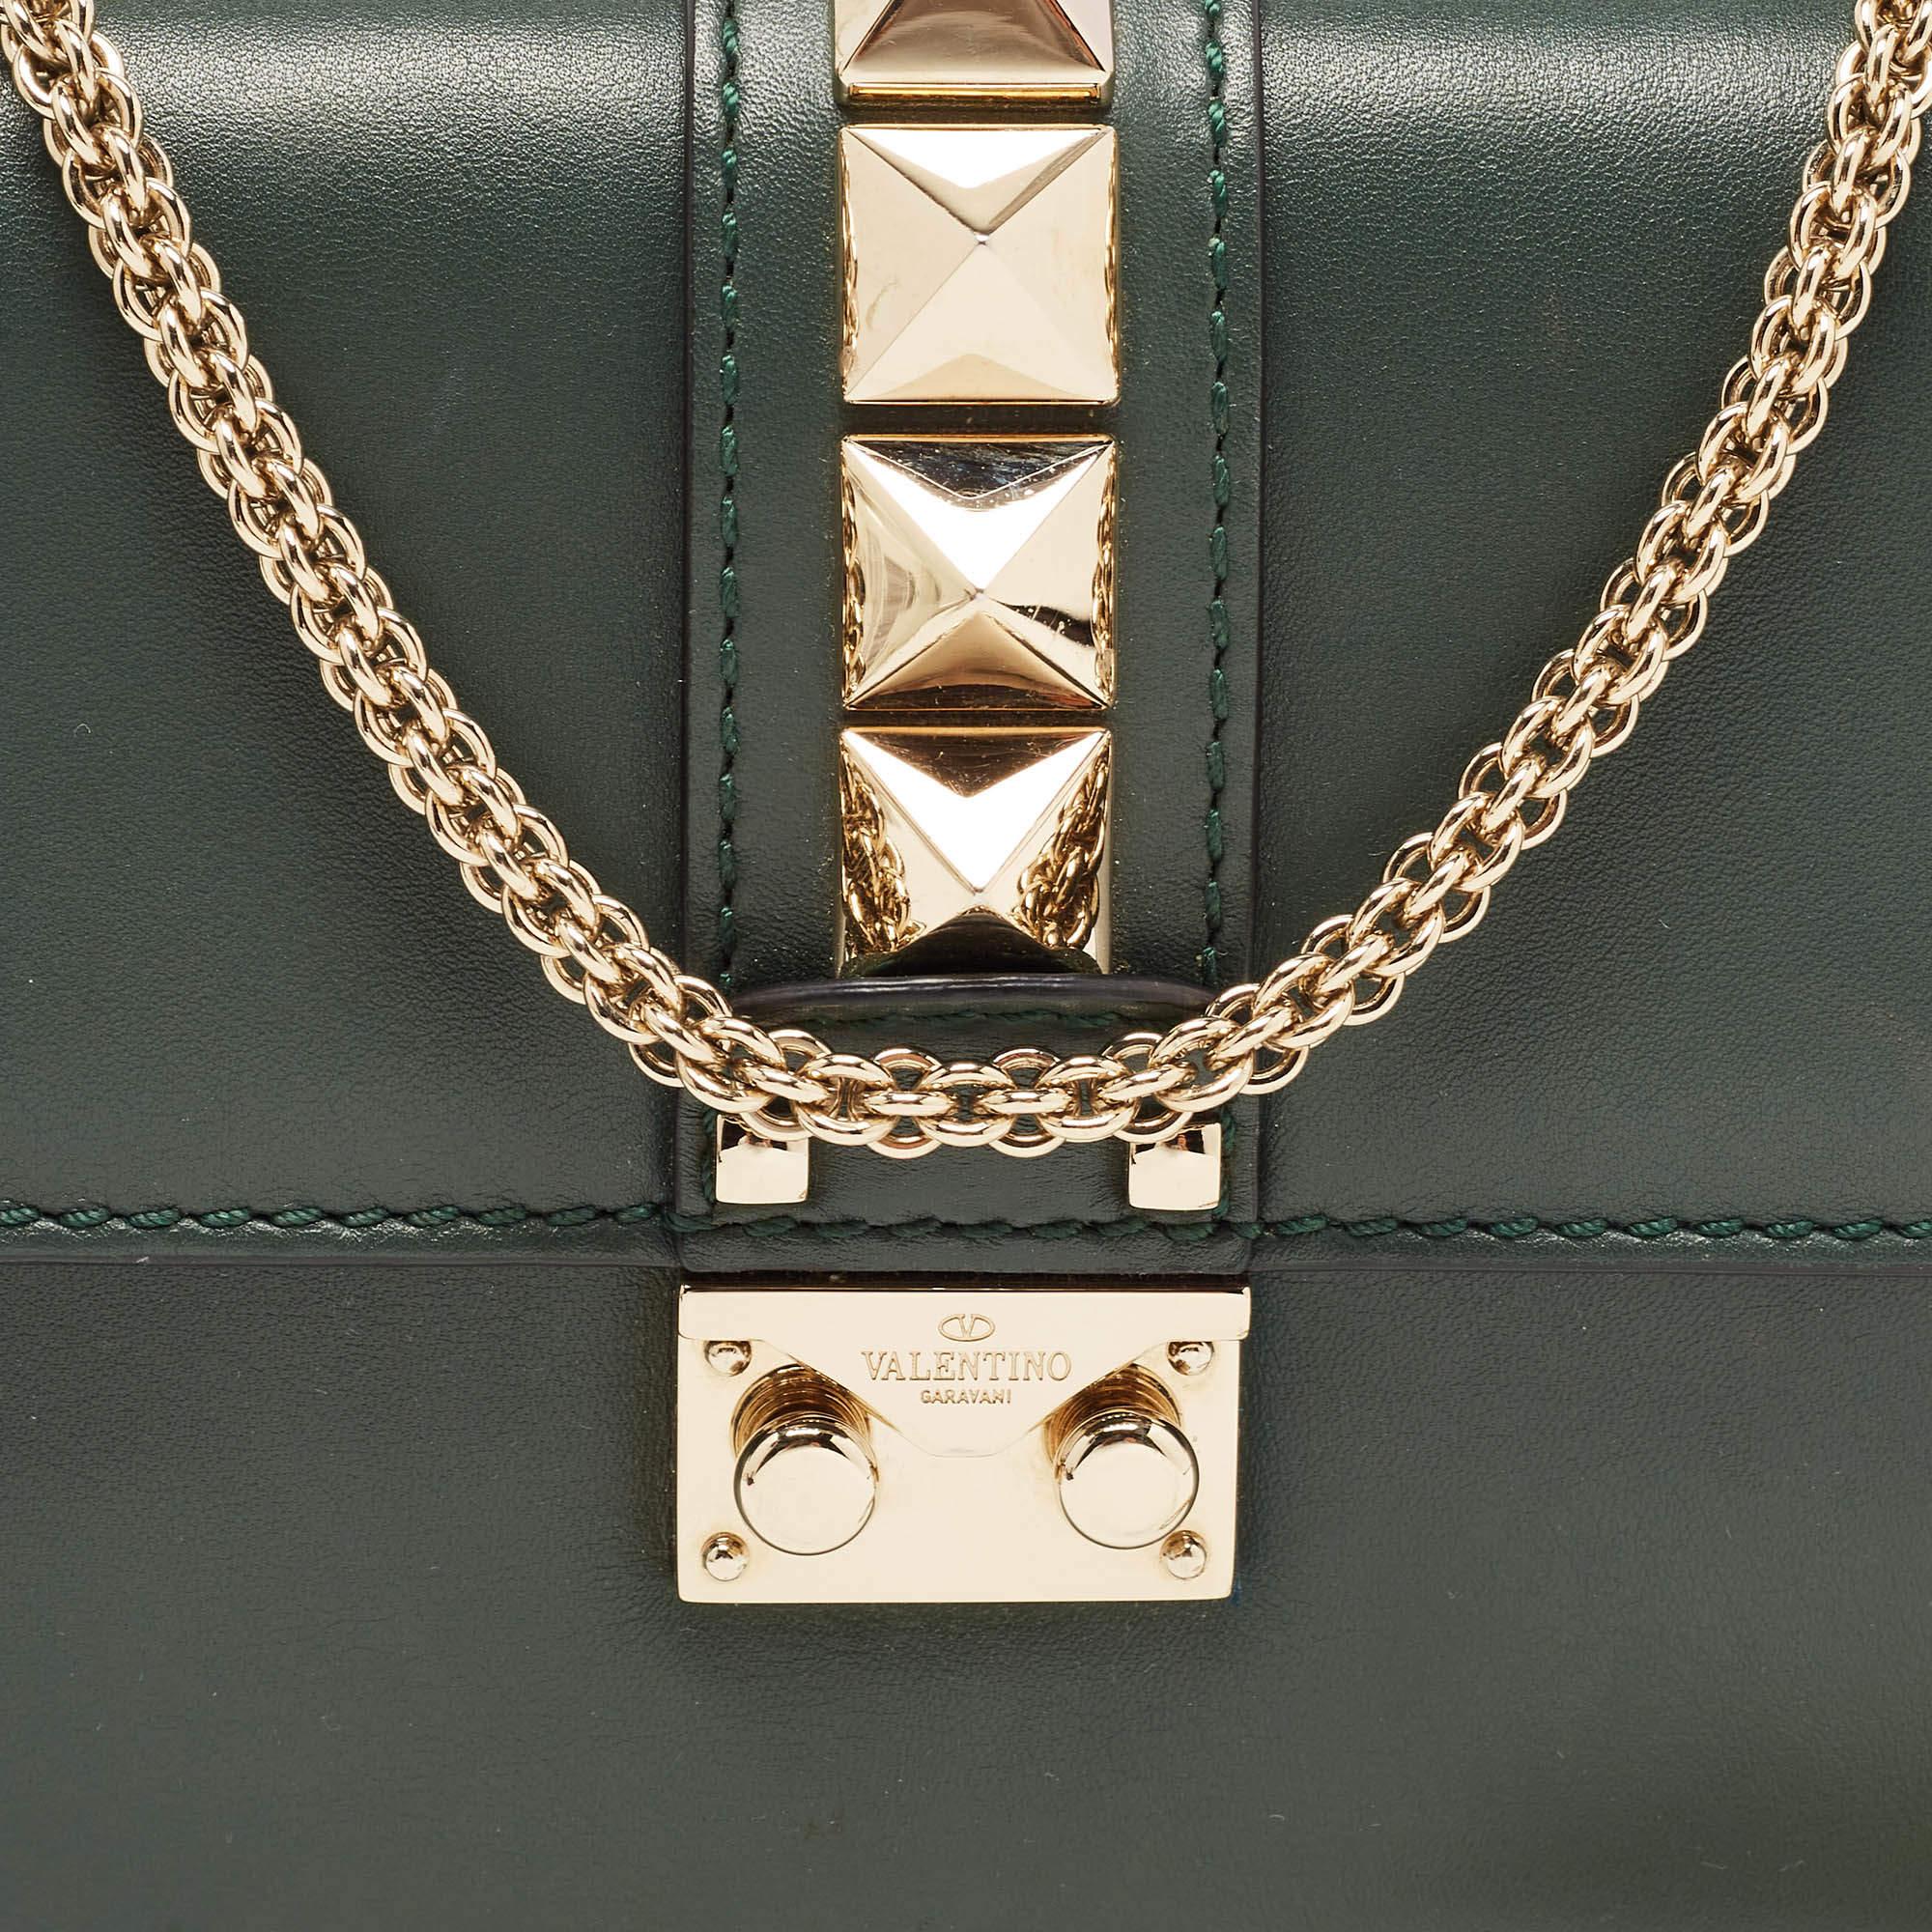 Valentino Green Leather Small Rockstud Glam Lock Flap Bag 13